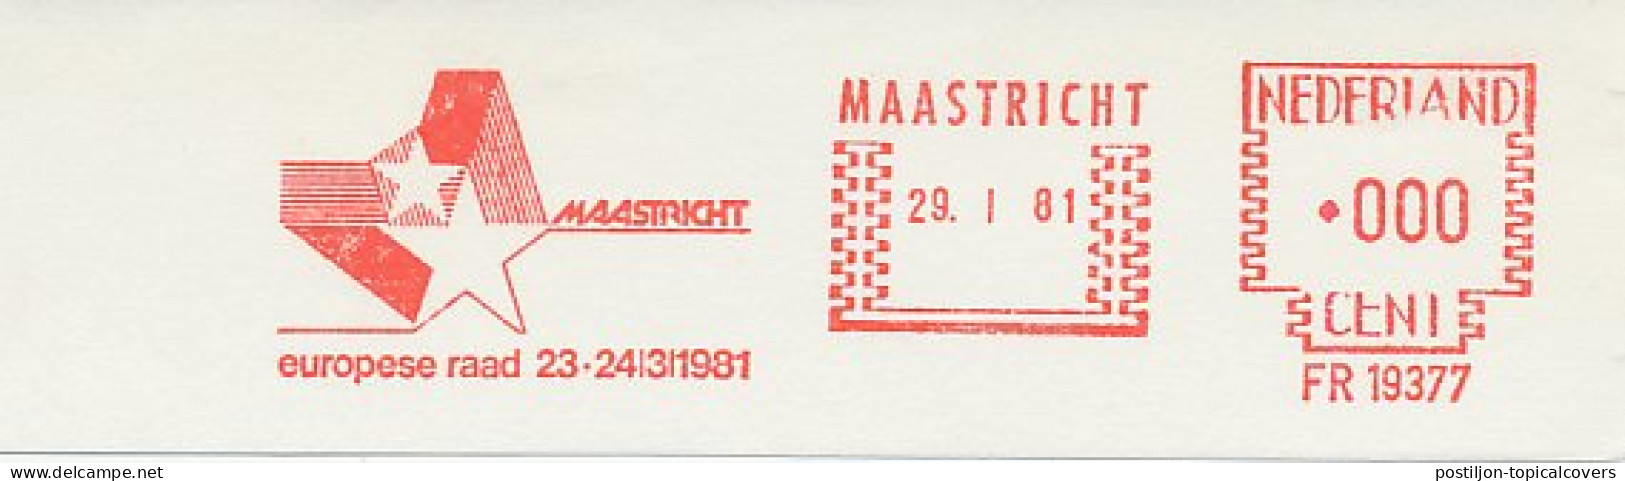 Meter Proof / Test Strip Netherlands 1981 European Council Maastricht - Institutions Européennes